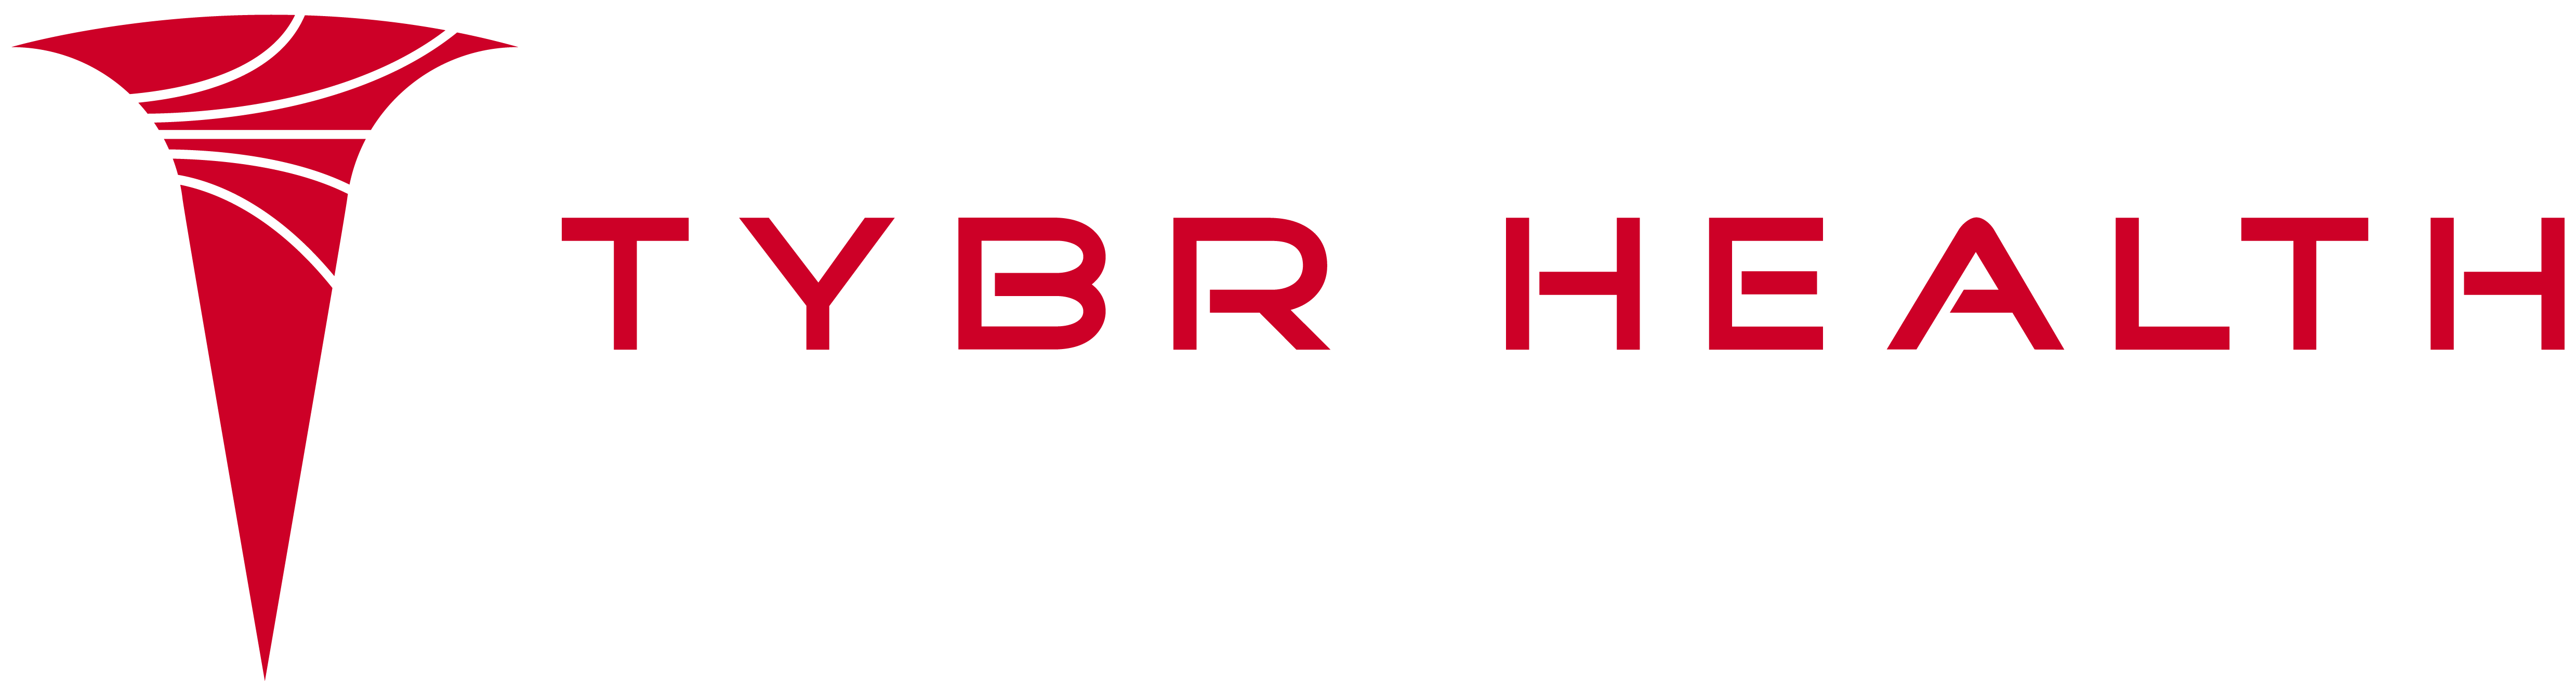 TYBR logo